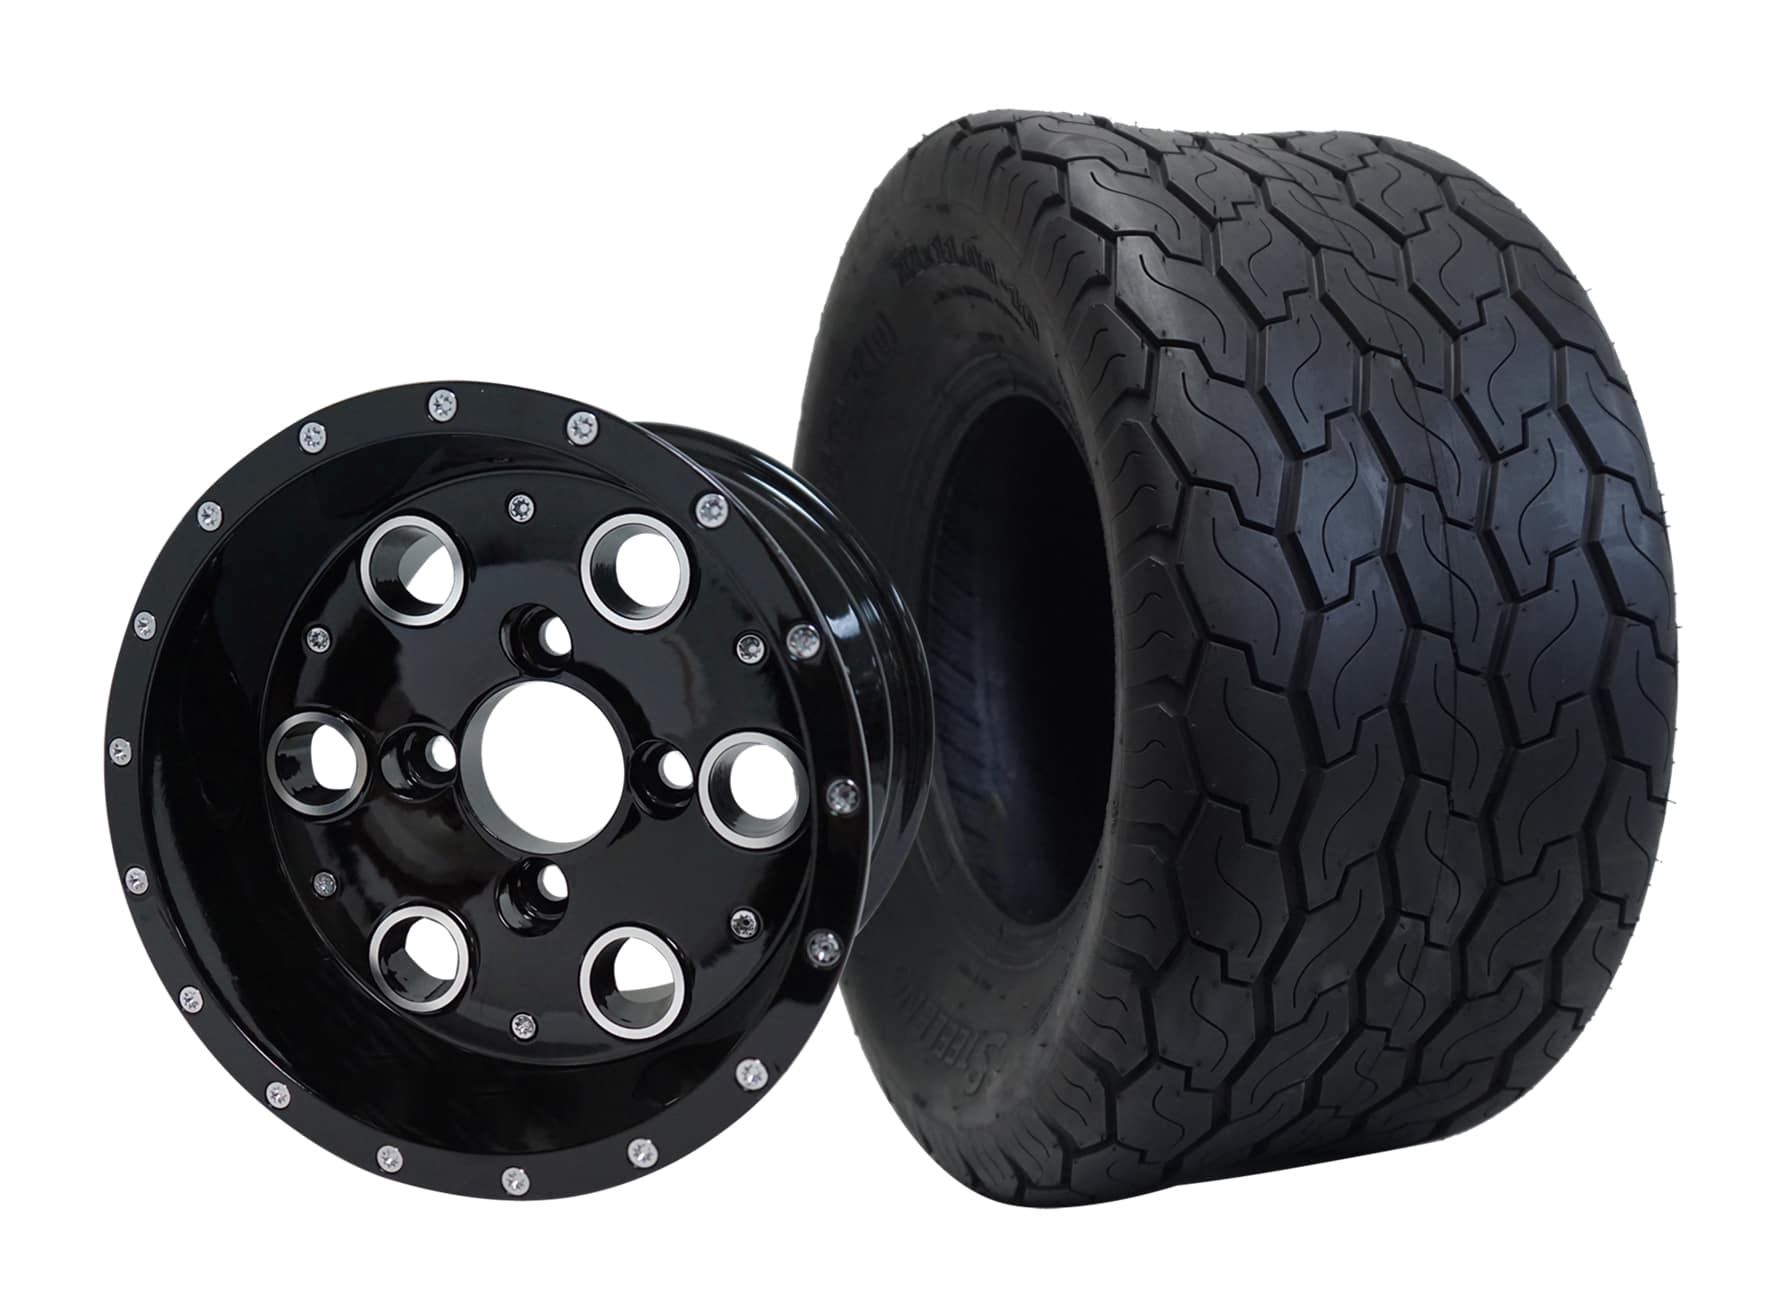 BNDL-TR1001-WH1008-CC0002-LN0005 10" Pioneer Glossy Black Wheel Aluminum Alloy & 18"x9"-10" Gecko All Terrain Tire x4